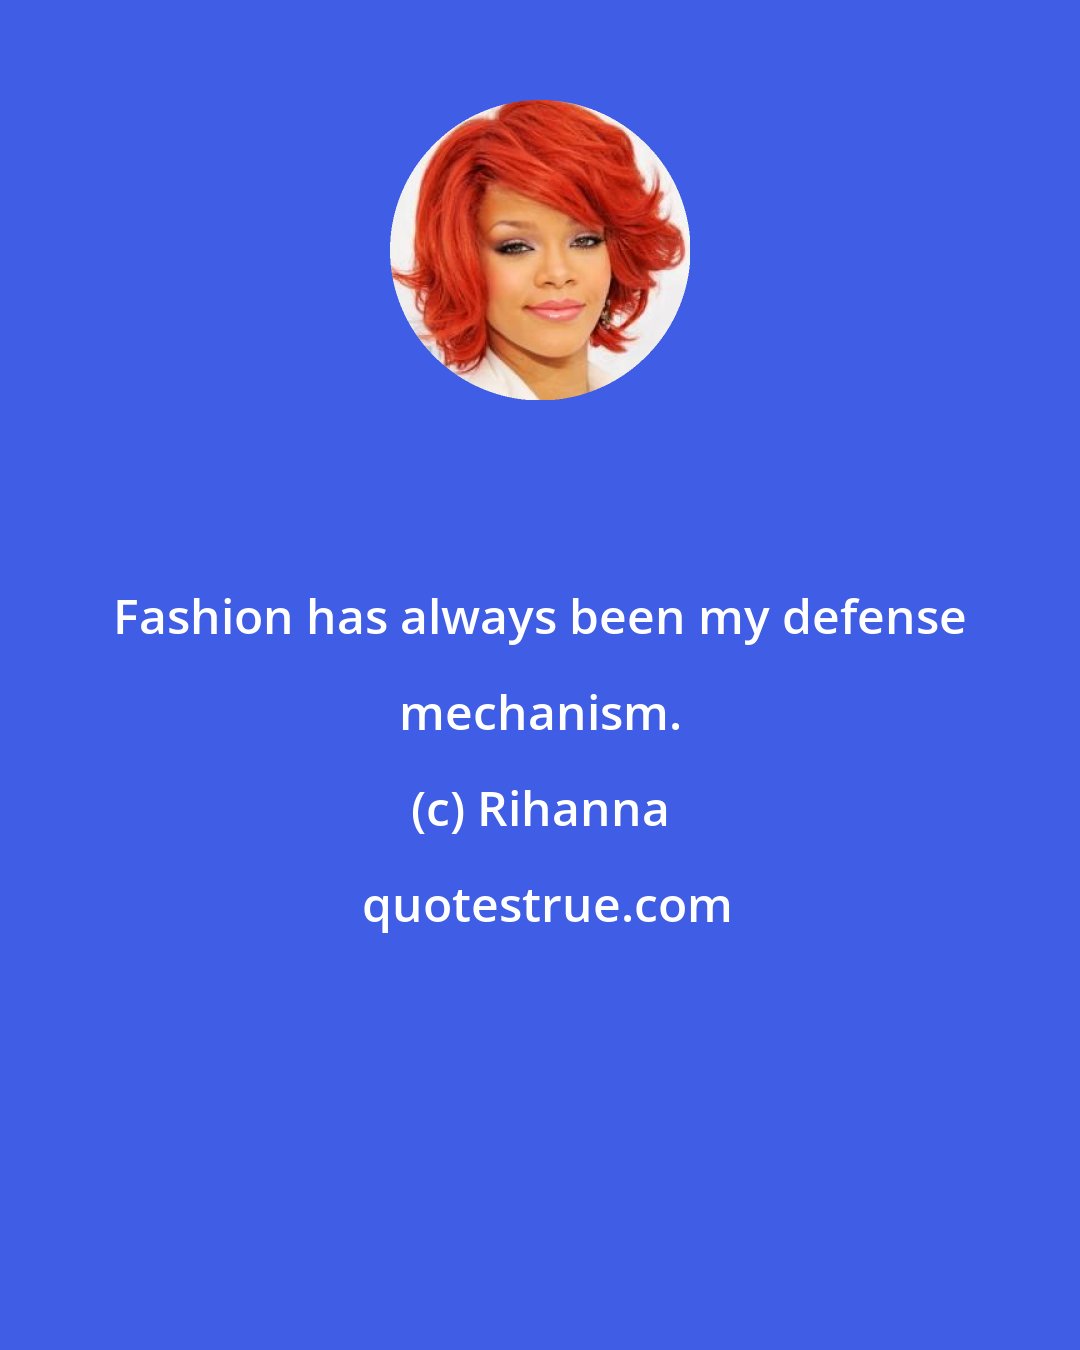 Rihanna: Fashion has always been my defense mechanism.